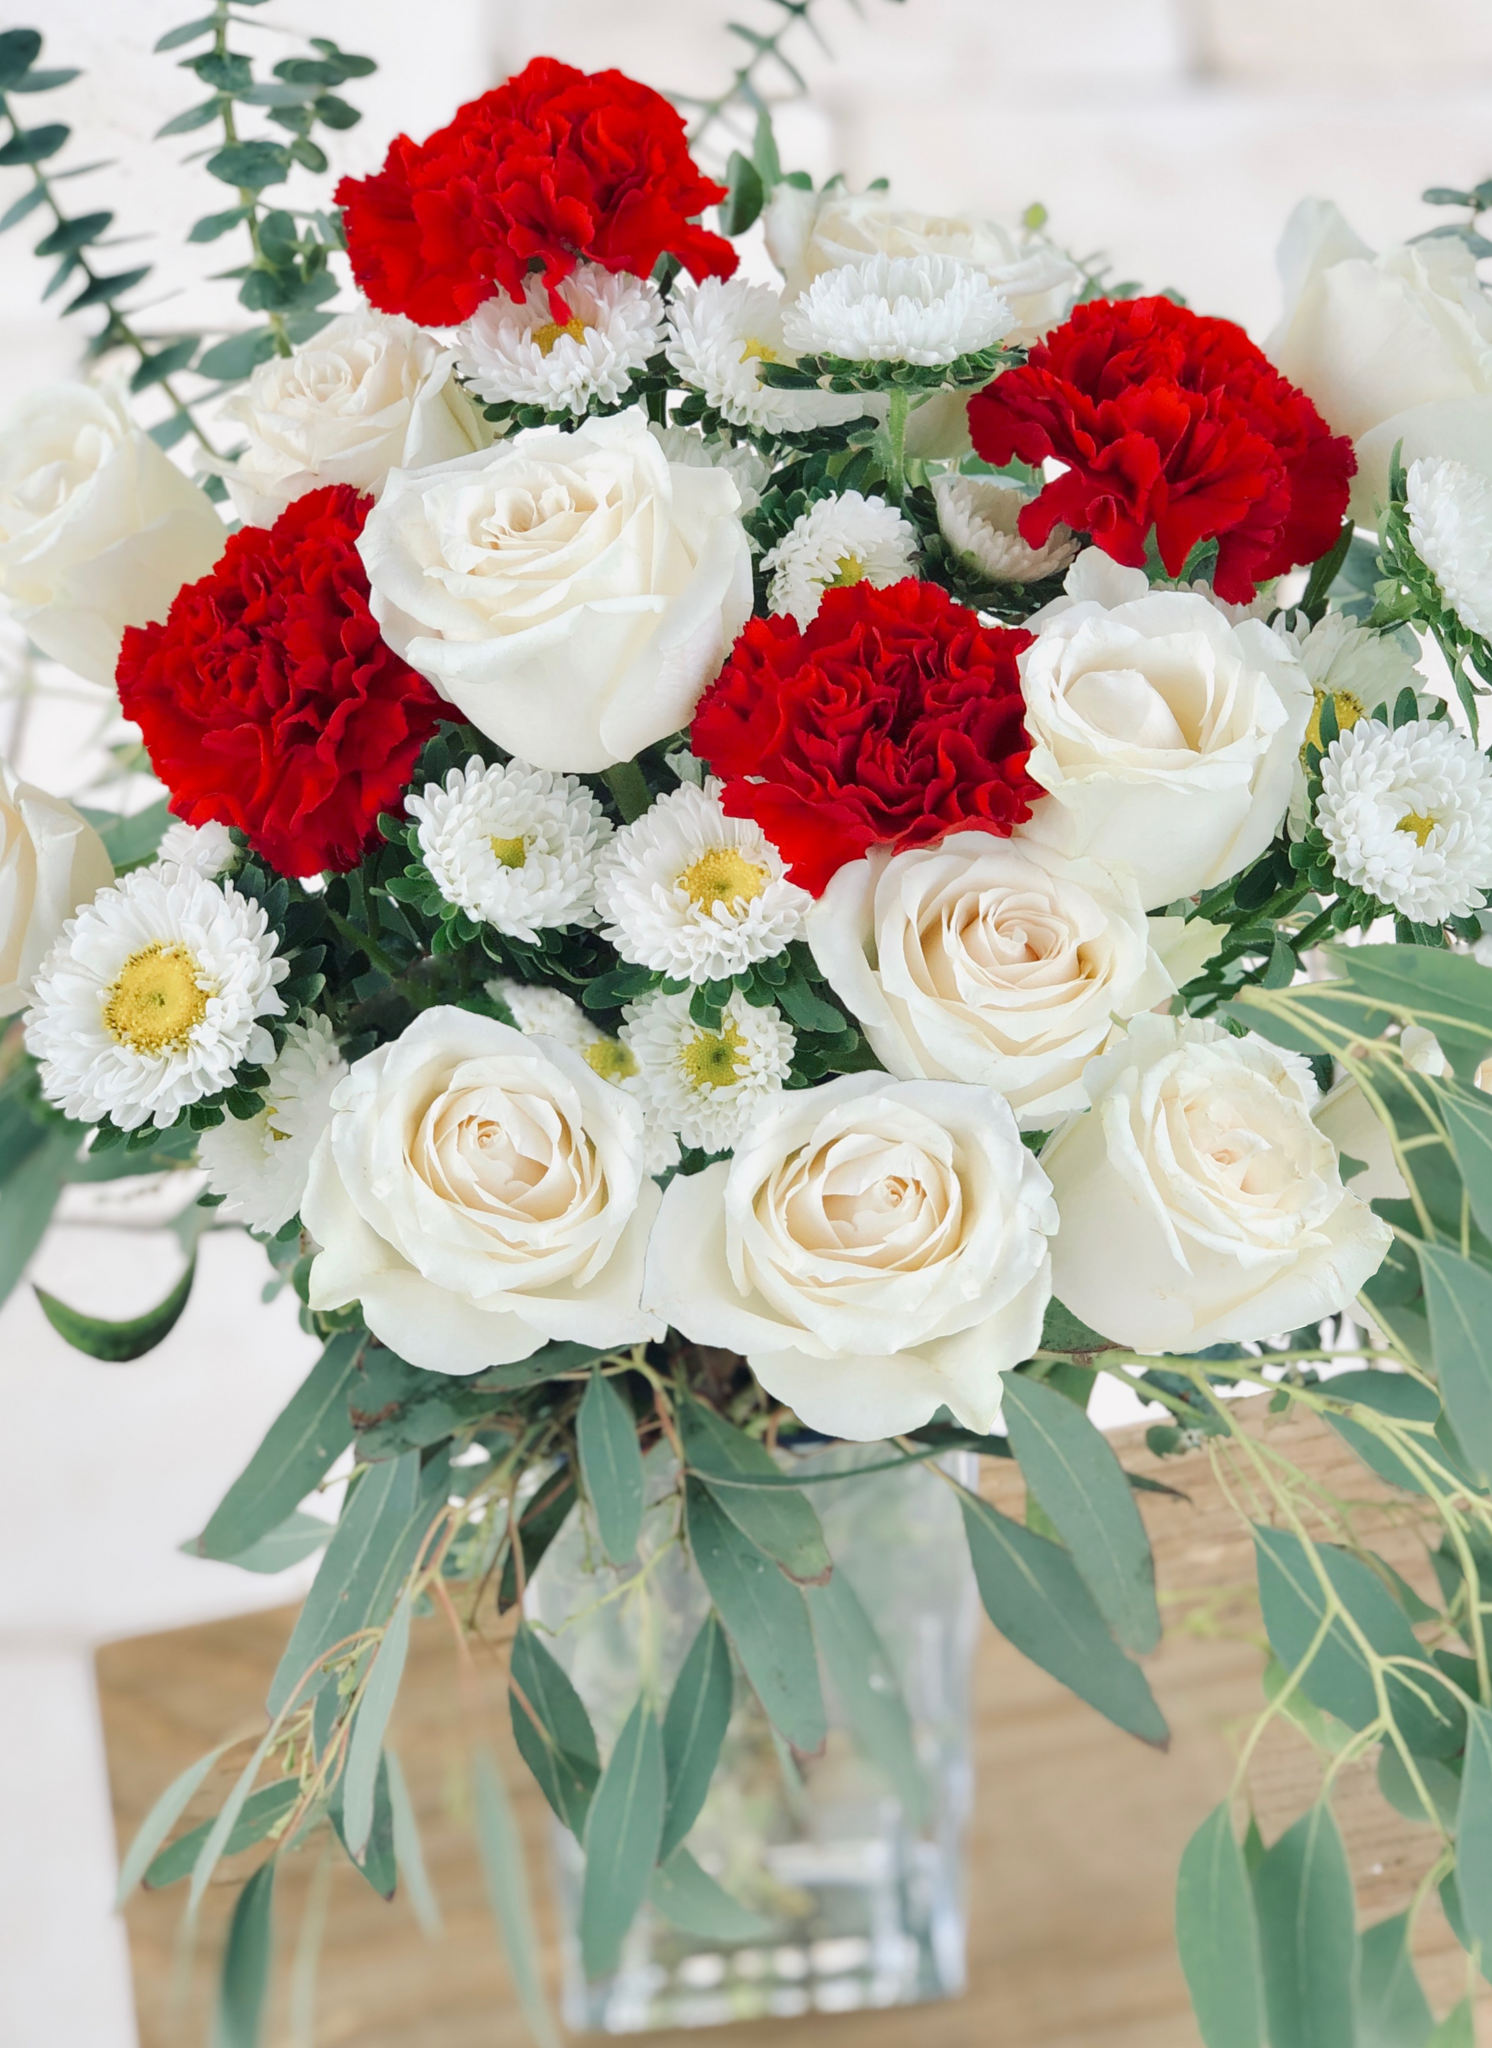 White rose elegance bouquet